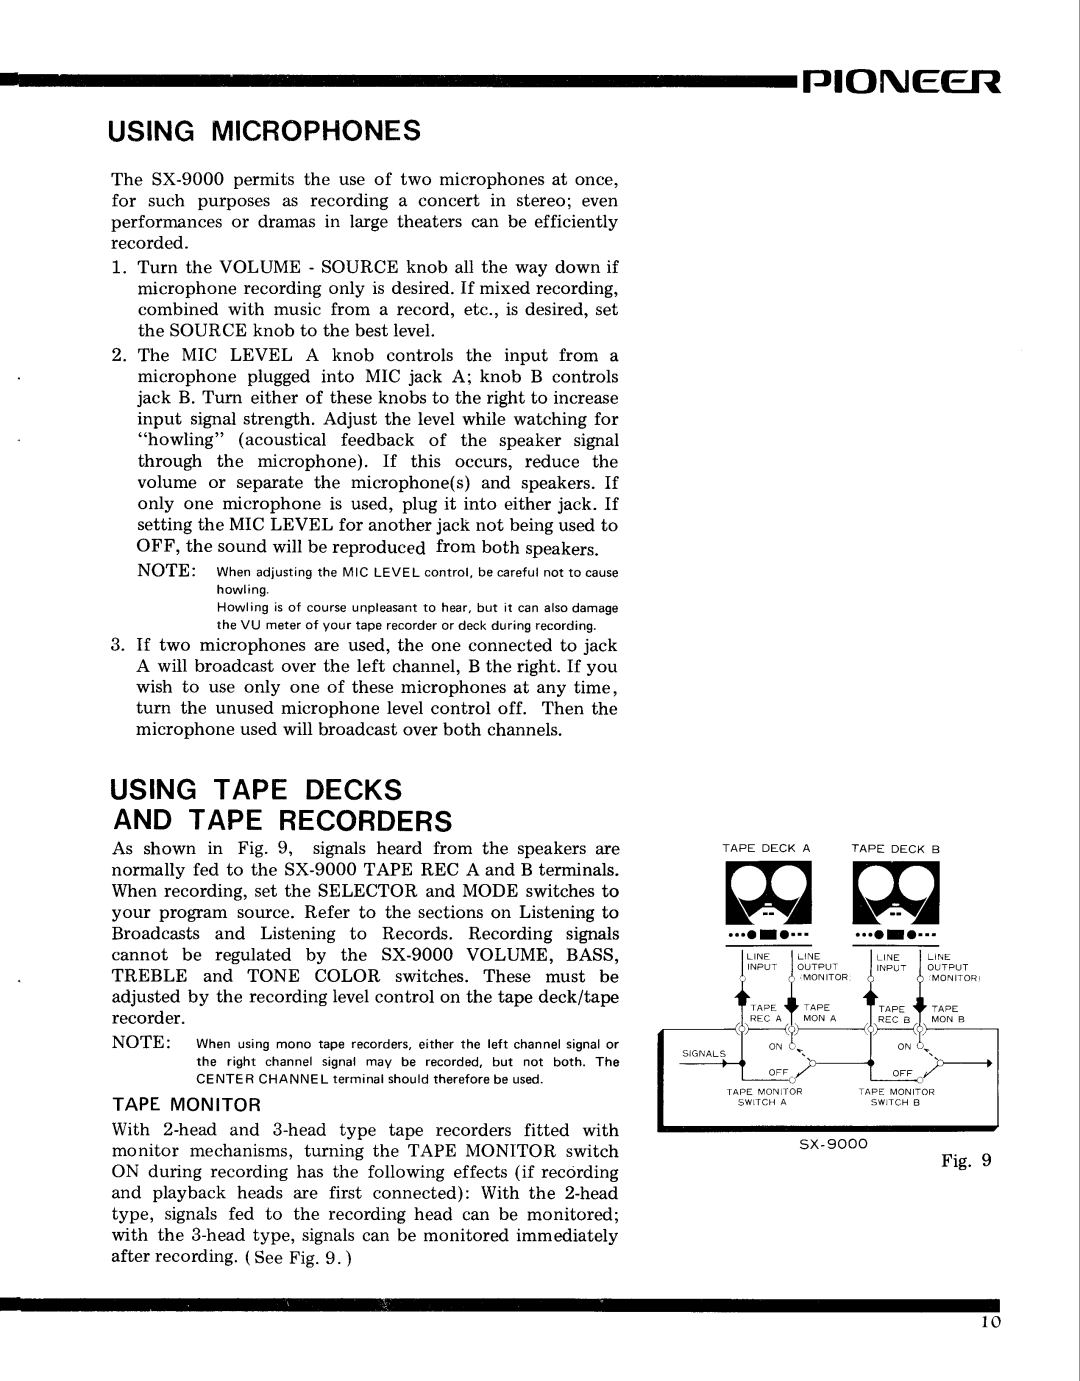 Pioneer SX-9000 service manual TJIONEEfiI, Usingmicrophones, Usingtape Decks And Tape Recorders 